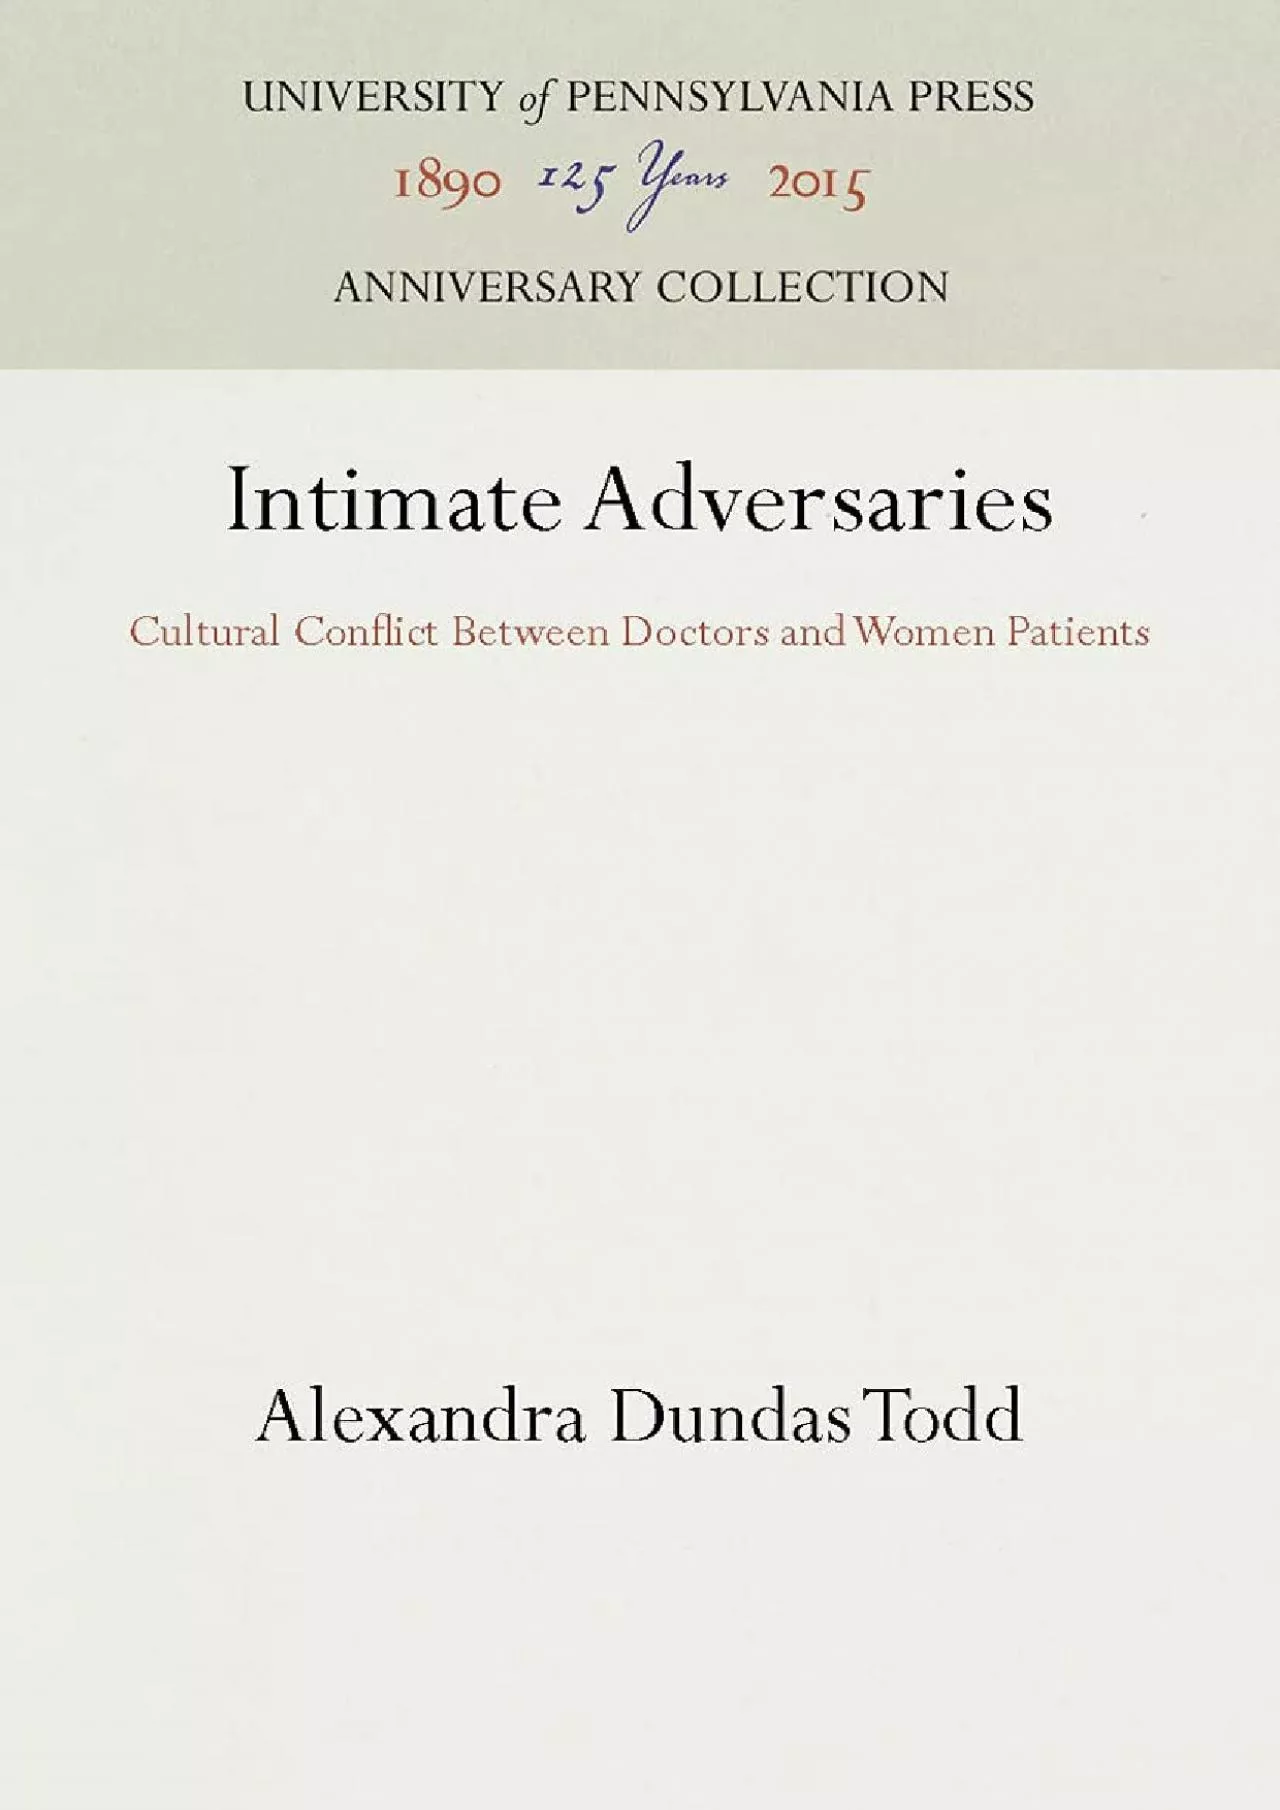 (READ)-Intimate Adversaries: Cultural Conflict Between Doctors and Women Patients (Anniversary